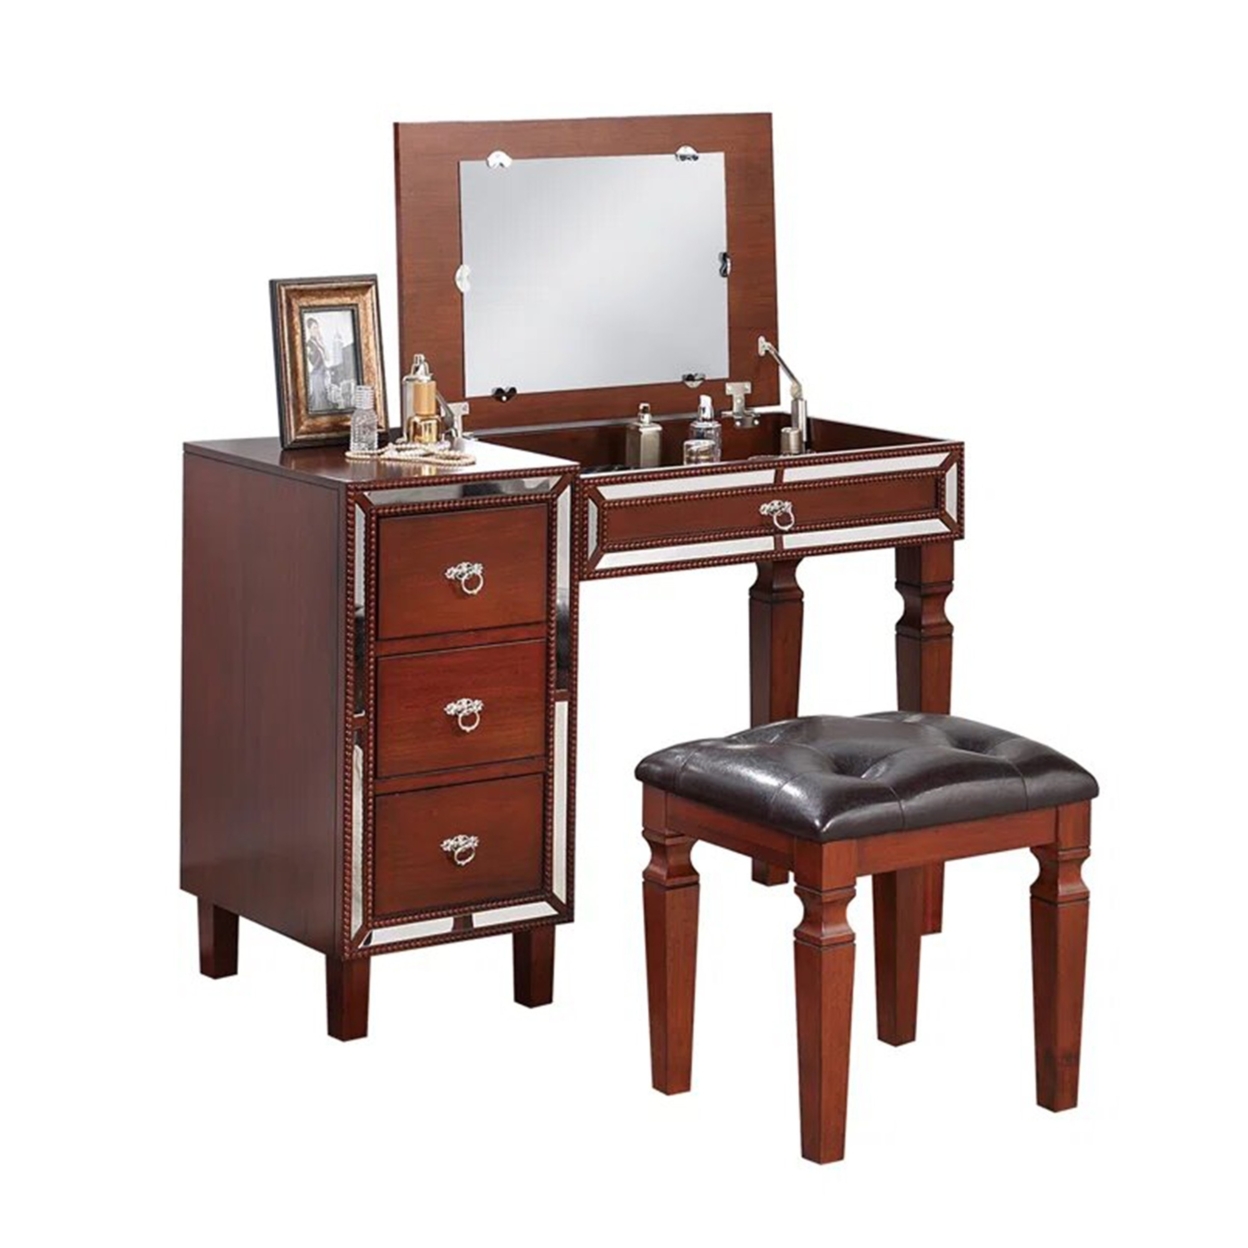 Sosi 47 Inch Vanity Desk Set With Stool, 3 Mirror Inlaid Drawers, Brown